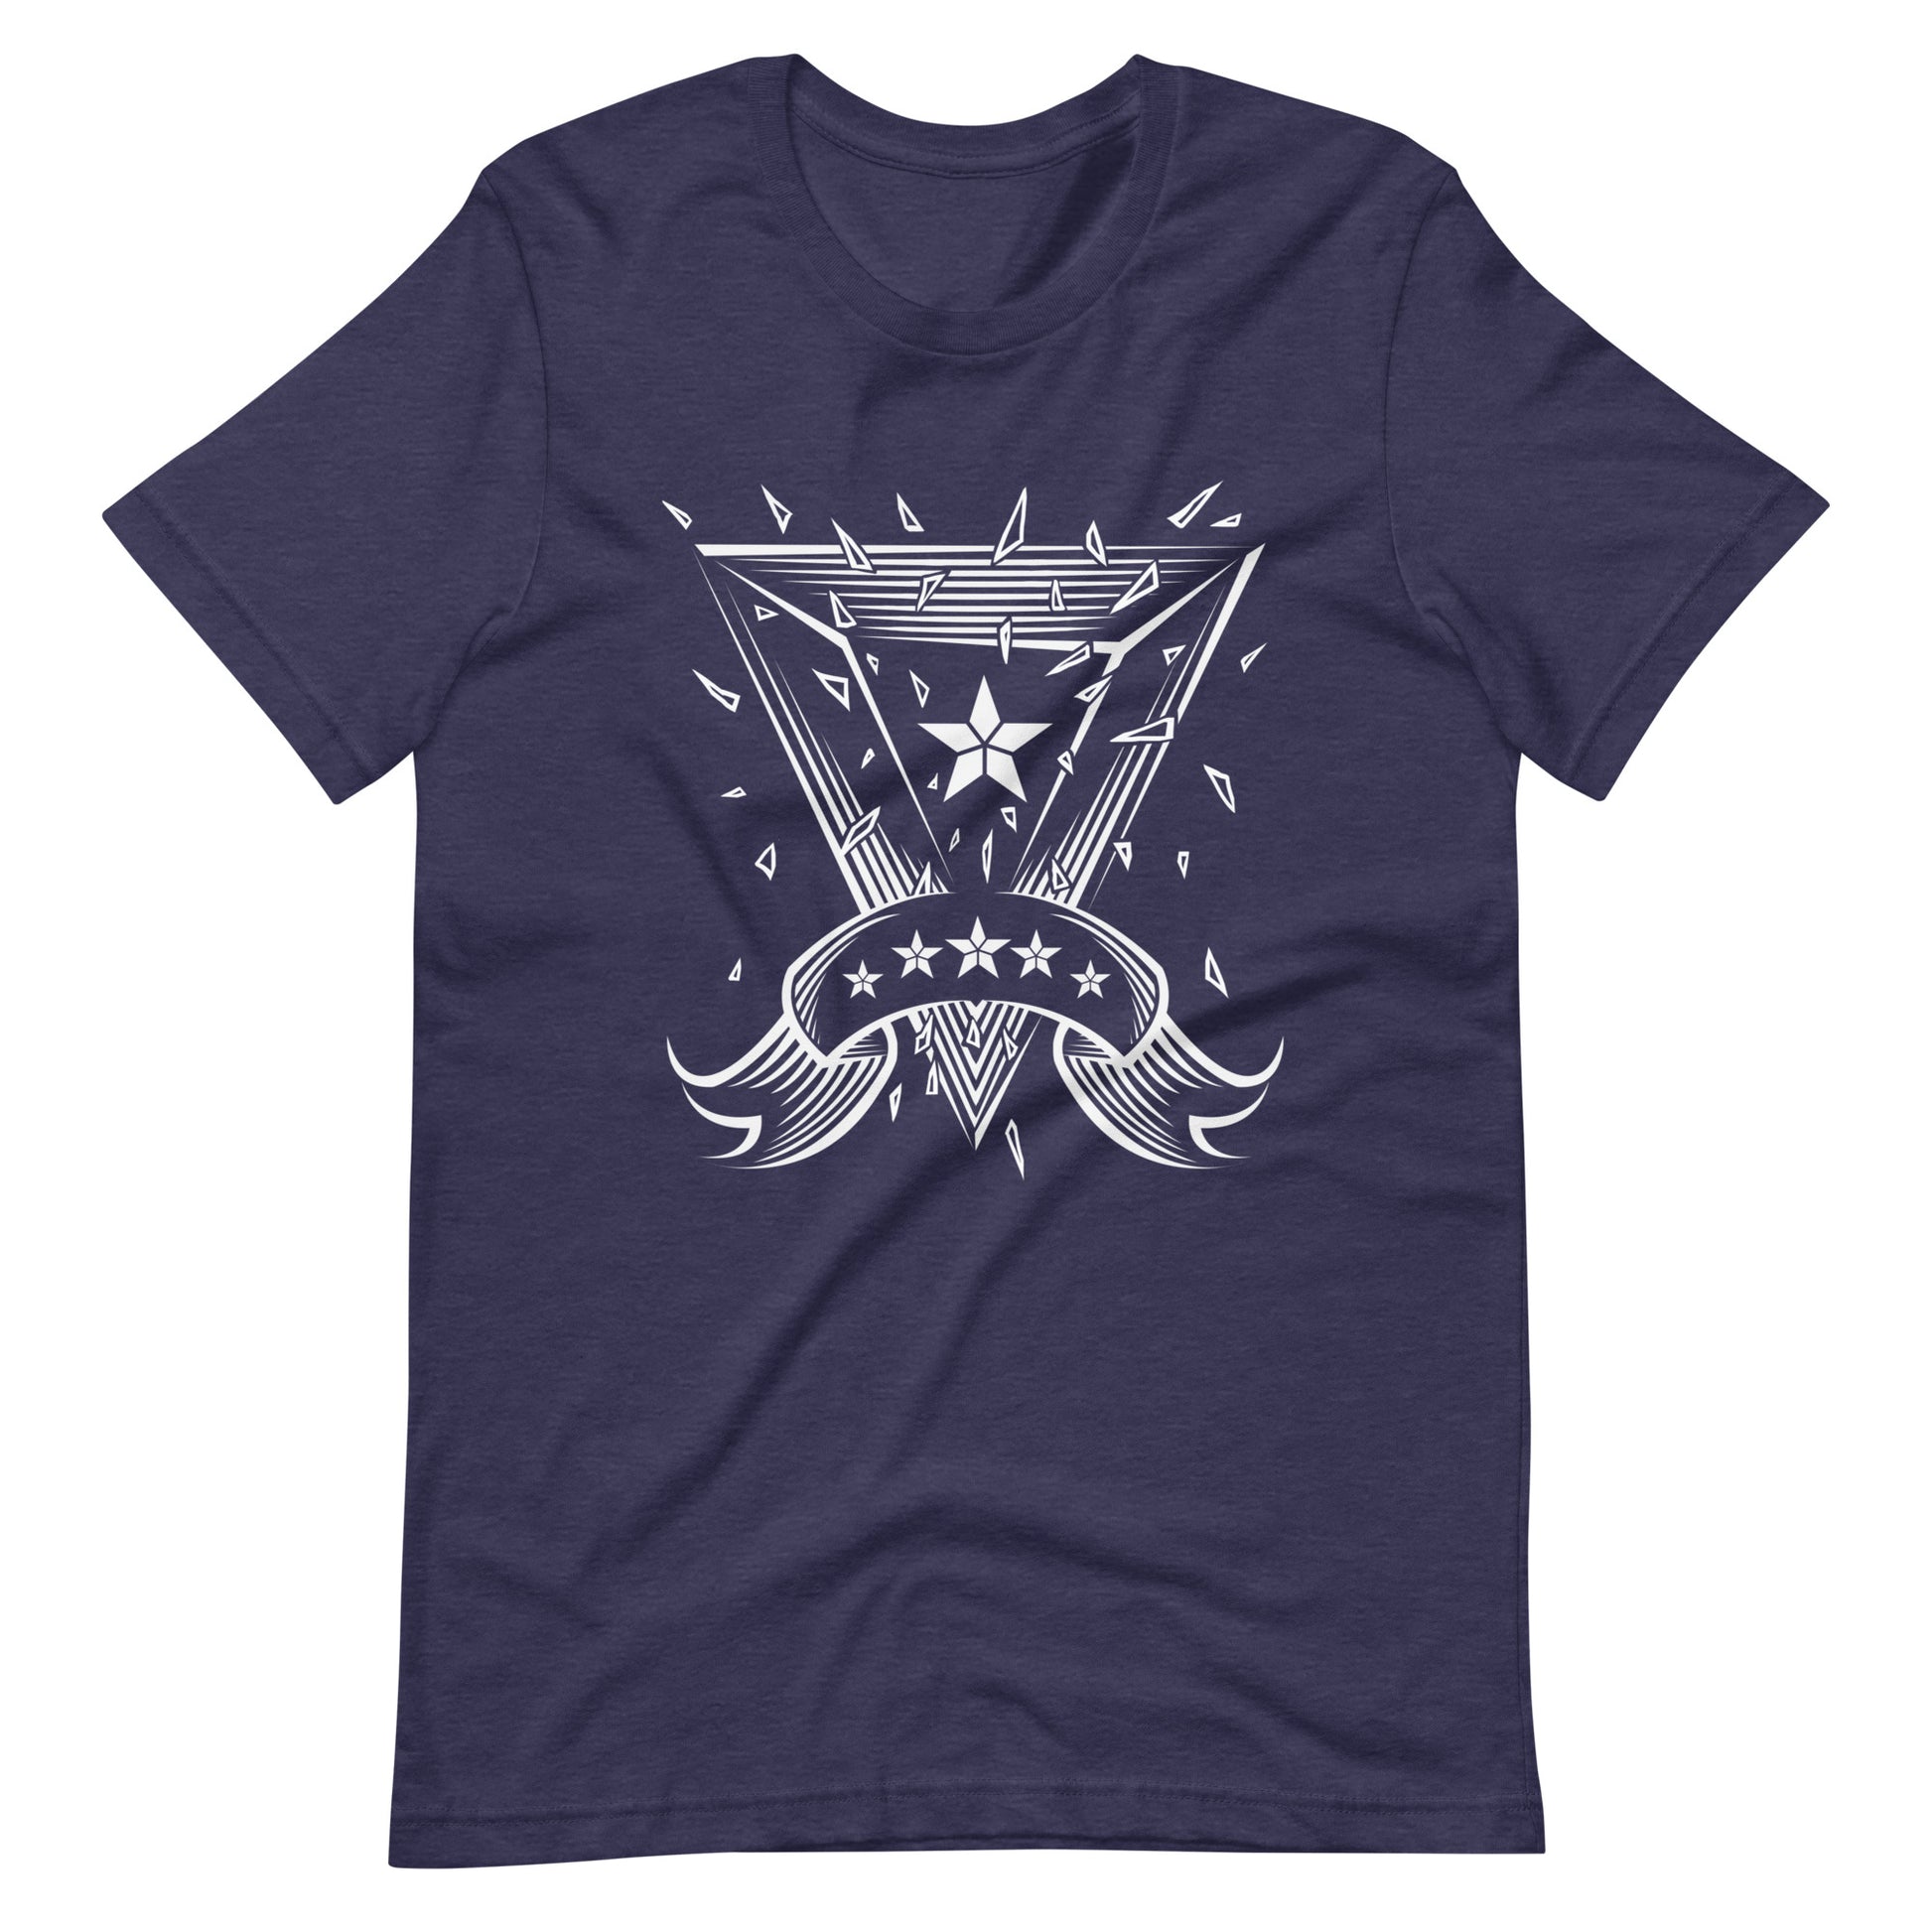 Starlight - Men's t-shirt - Heather Midnight Navy Front